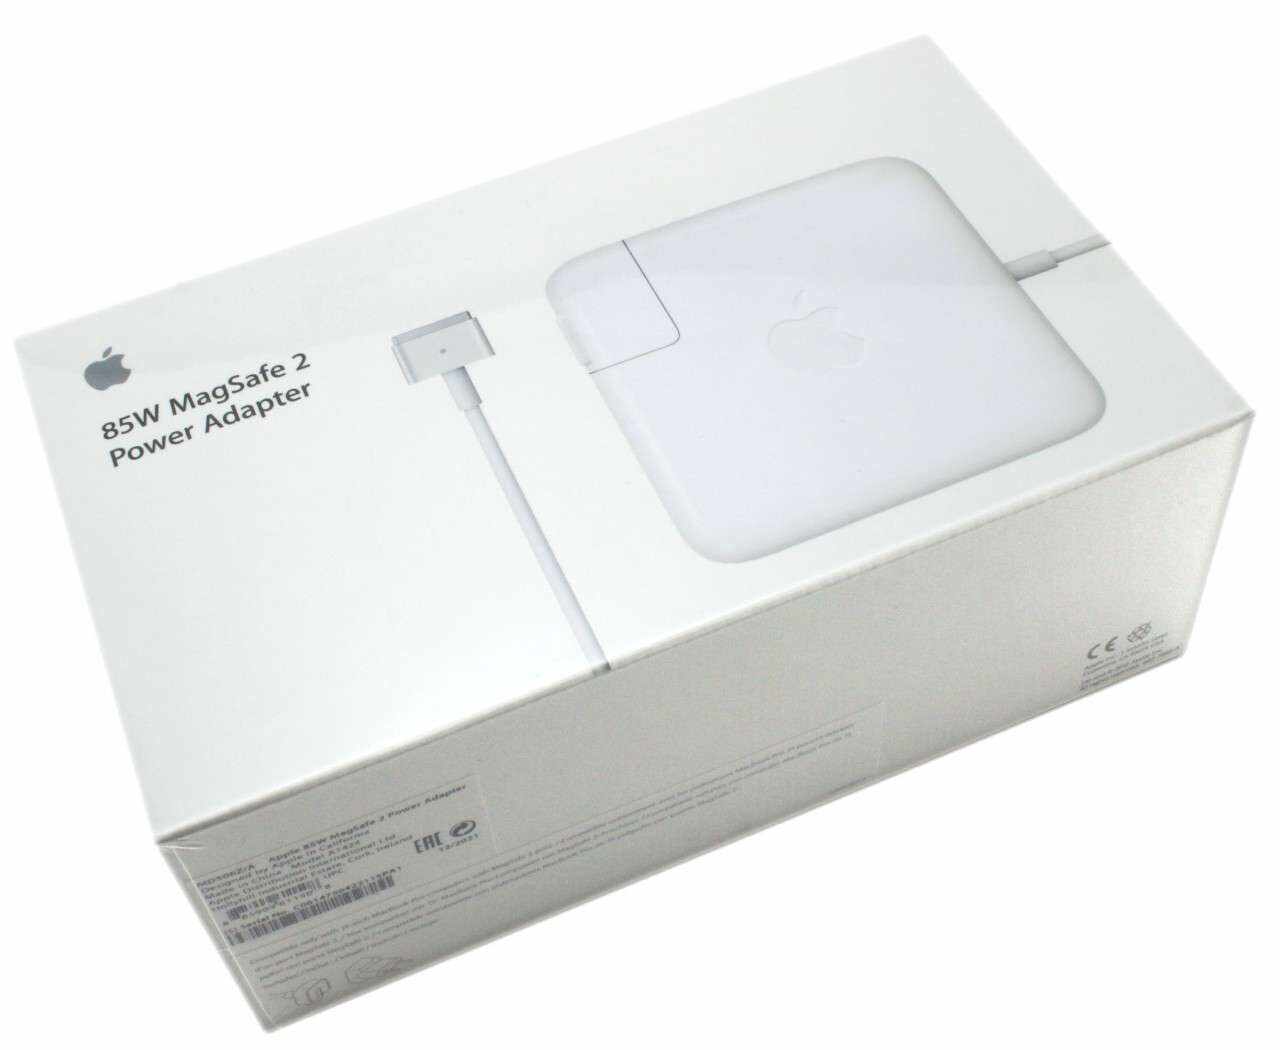 Incarcator Apple Macbook Pro Retina 13 A1425 Late 2012 85W ORIGINAL